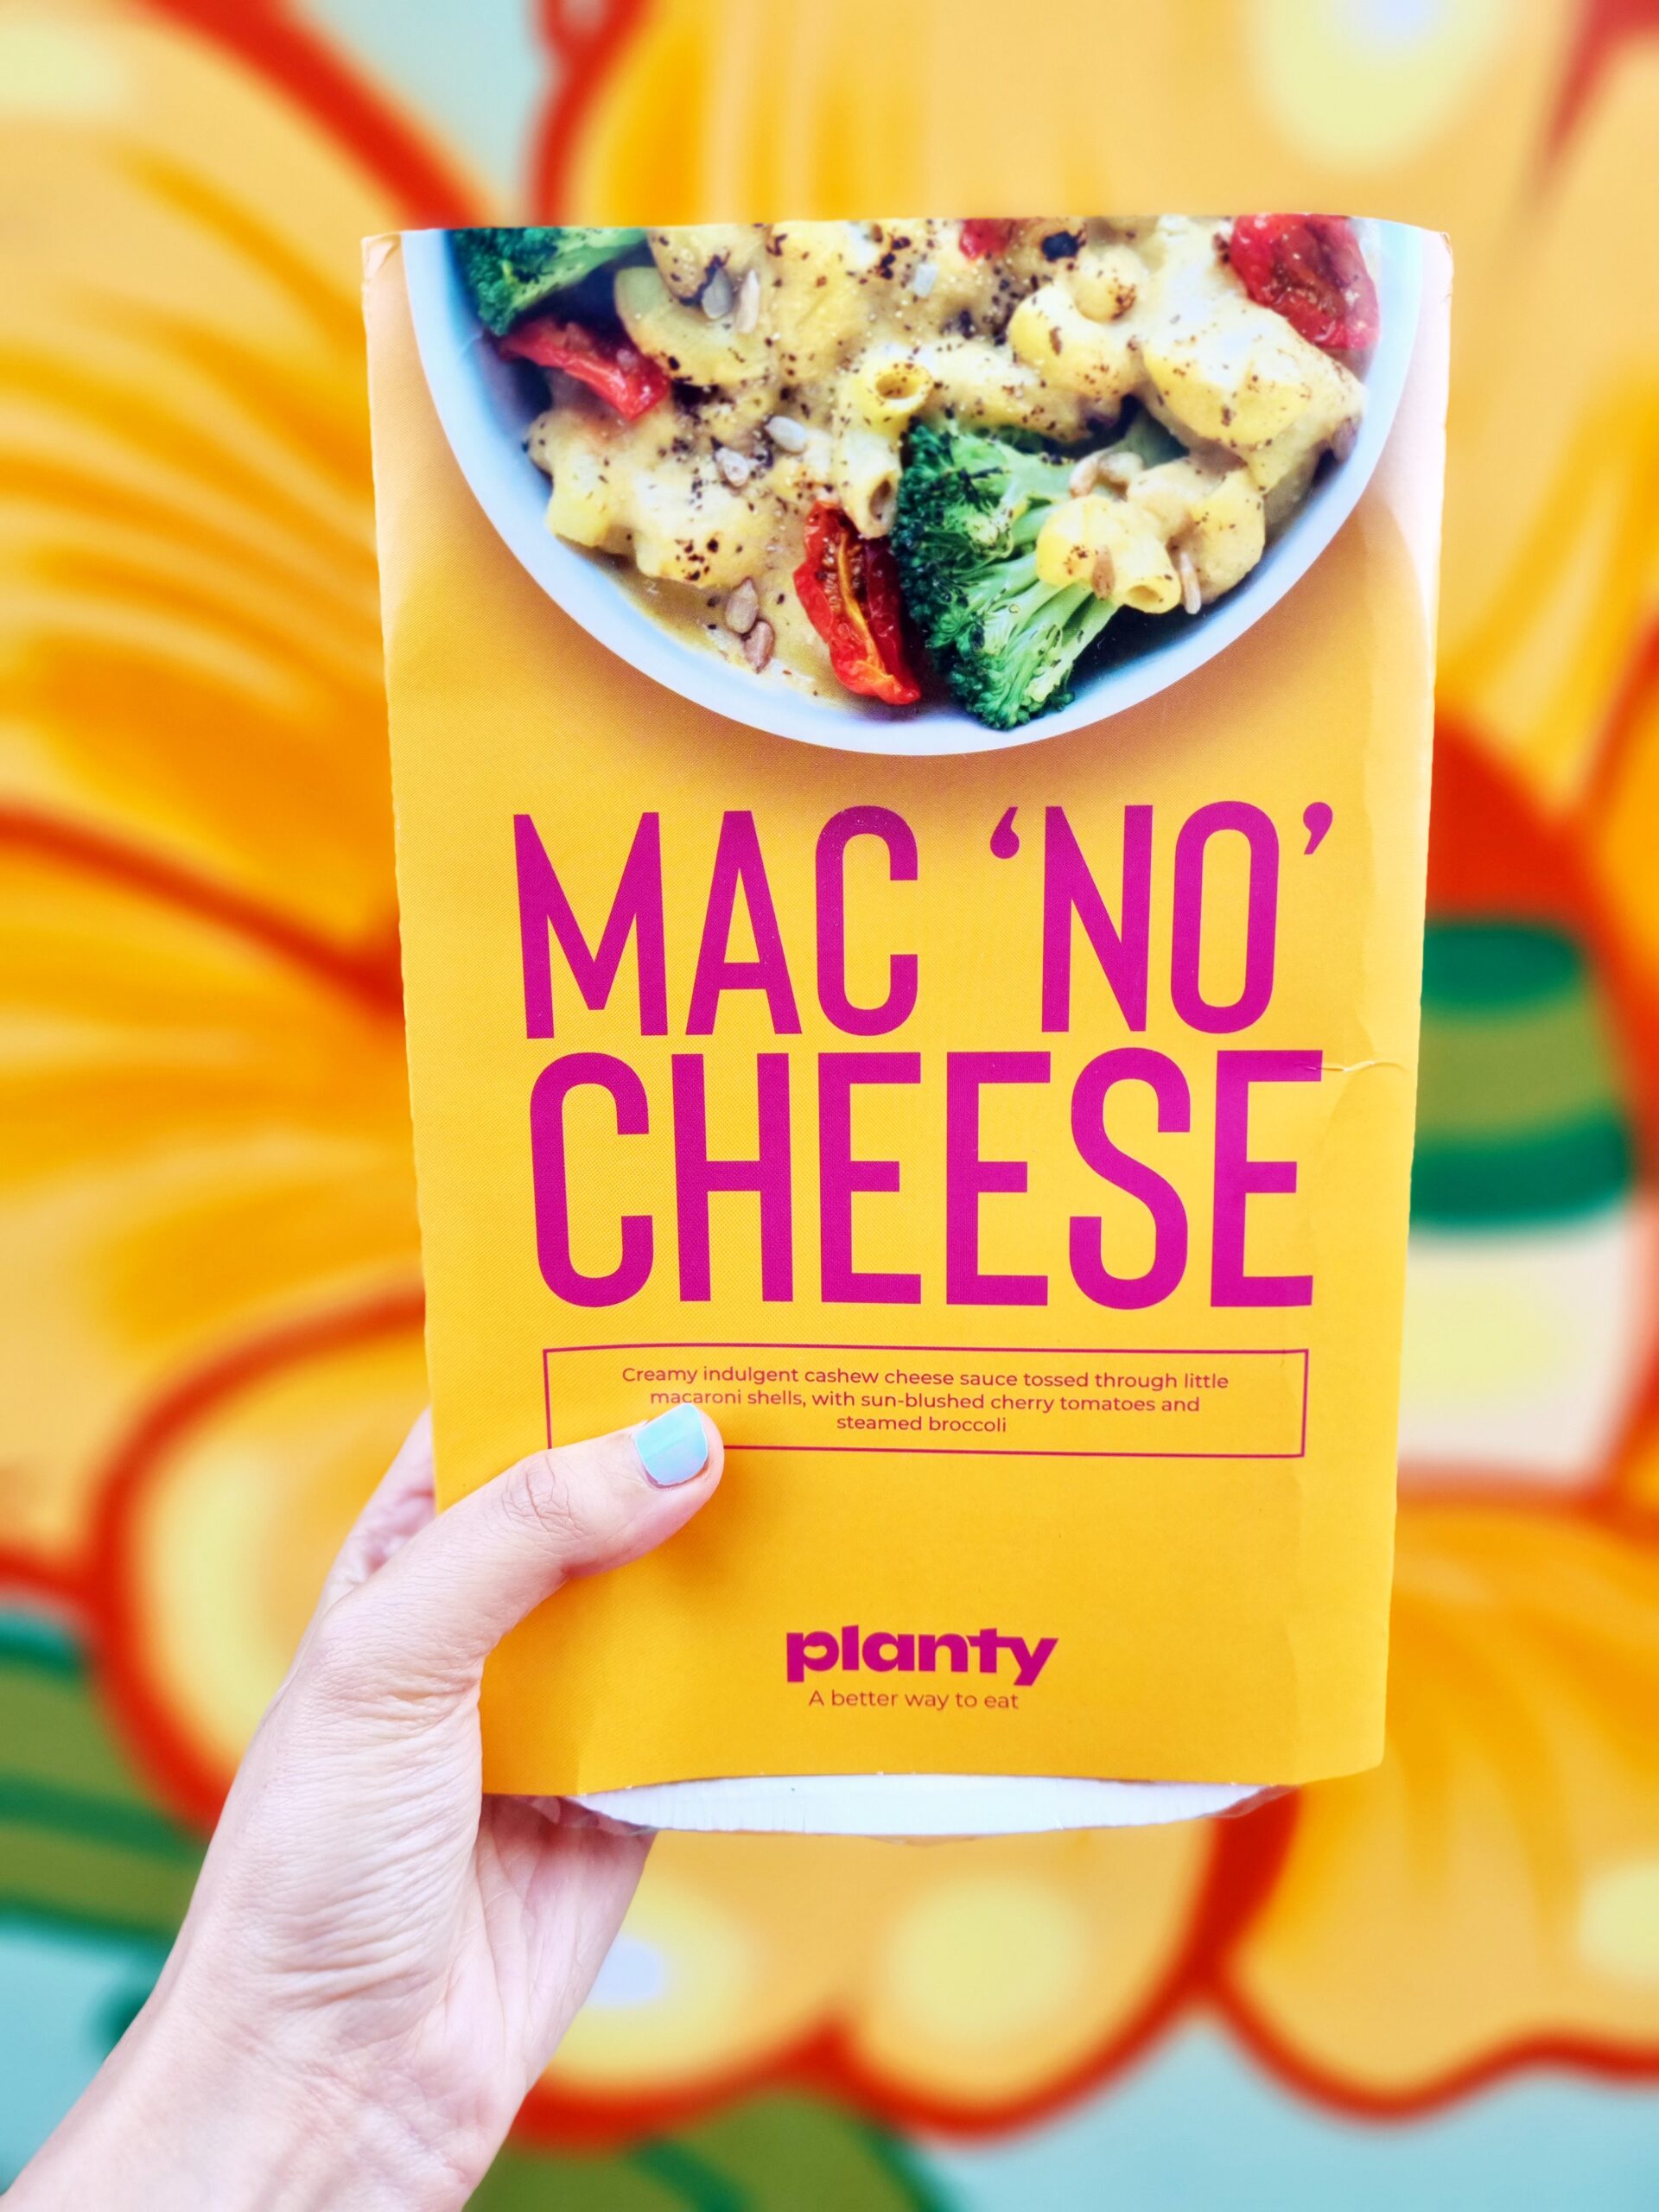 <img src="planty.jpg" alt="planty mac no cheese best vegan food"/>